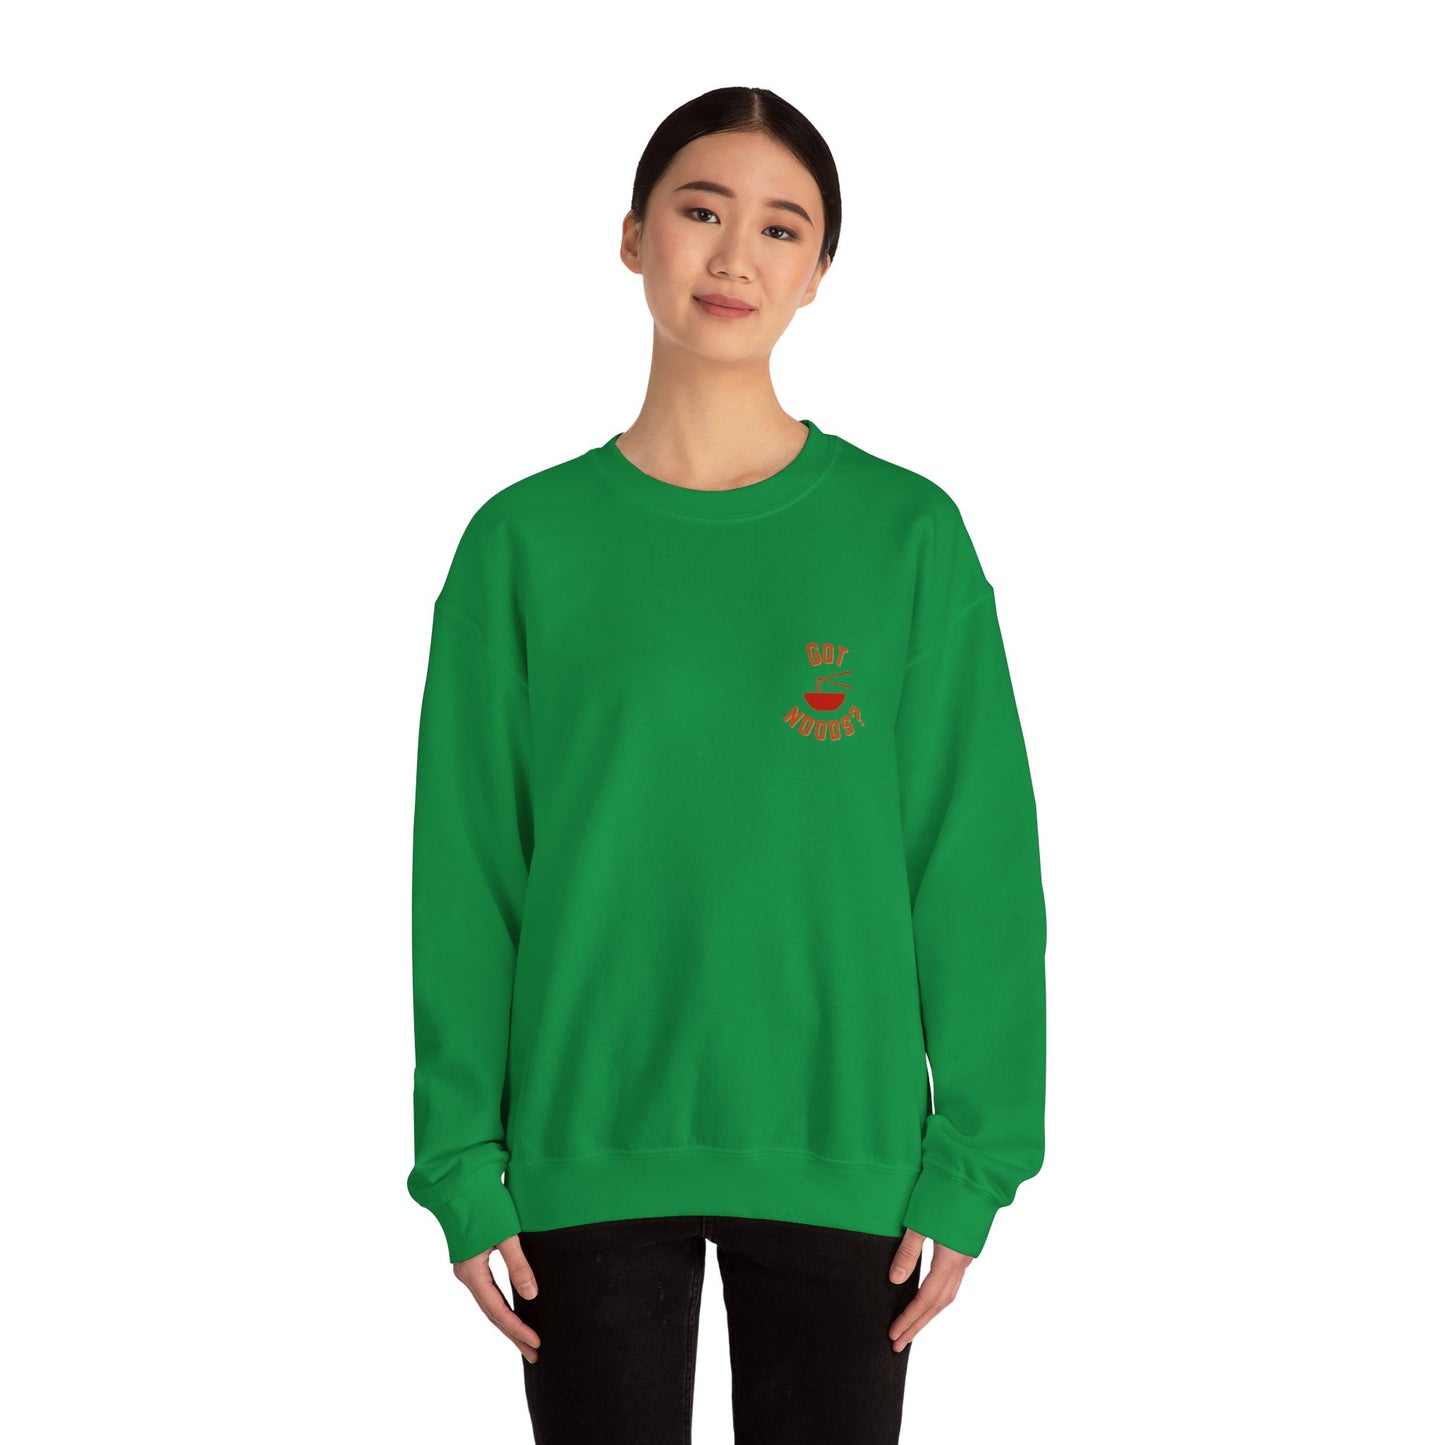 "Send Noods" Heavy Blend™ Crewneck Sweatshirt